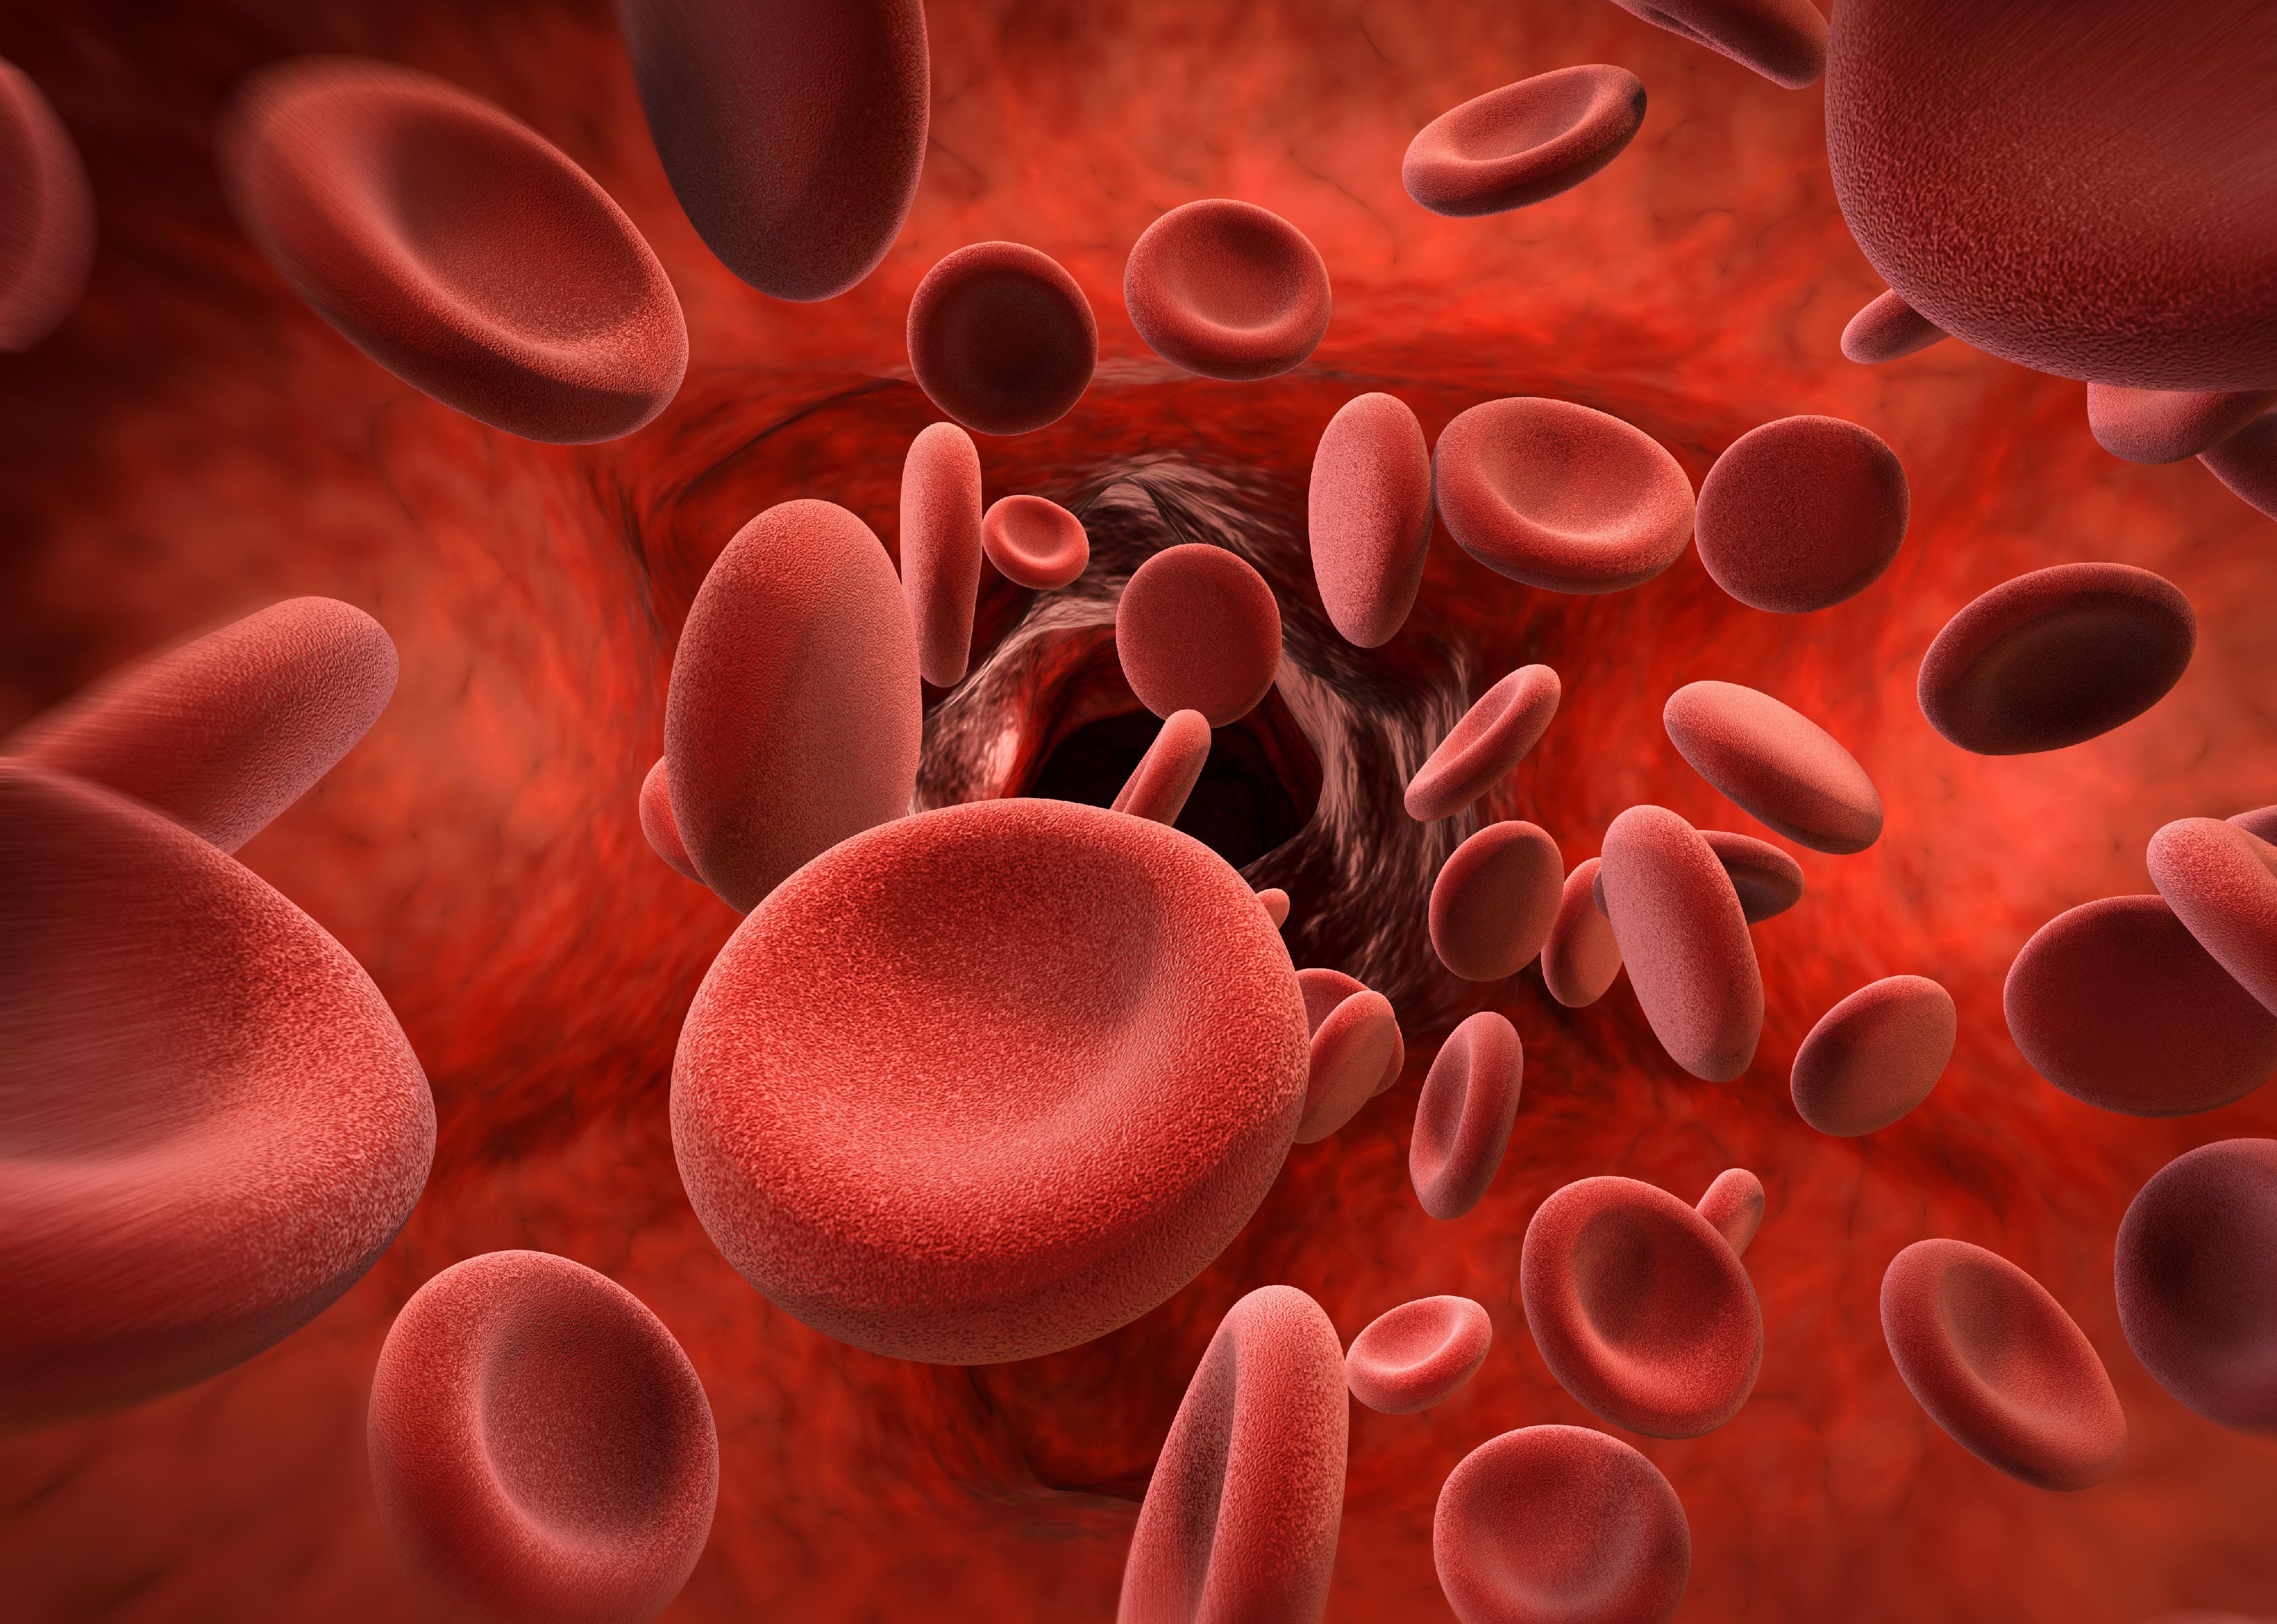 3D Rendering of red blood cells in vein.